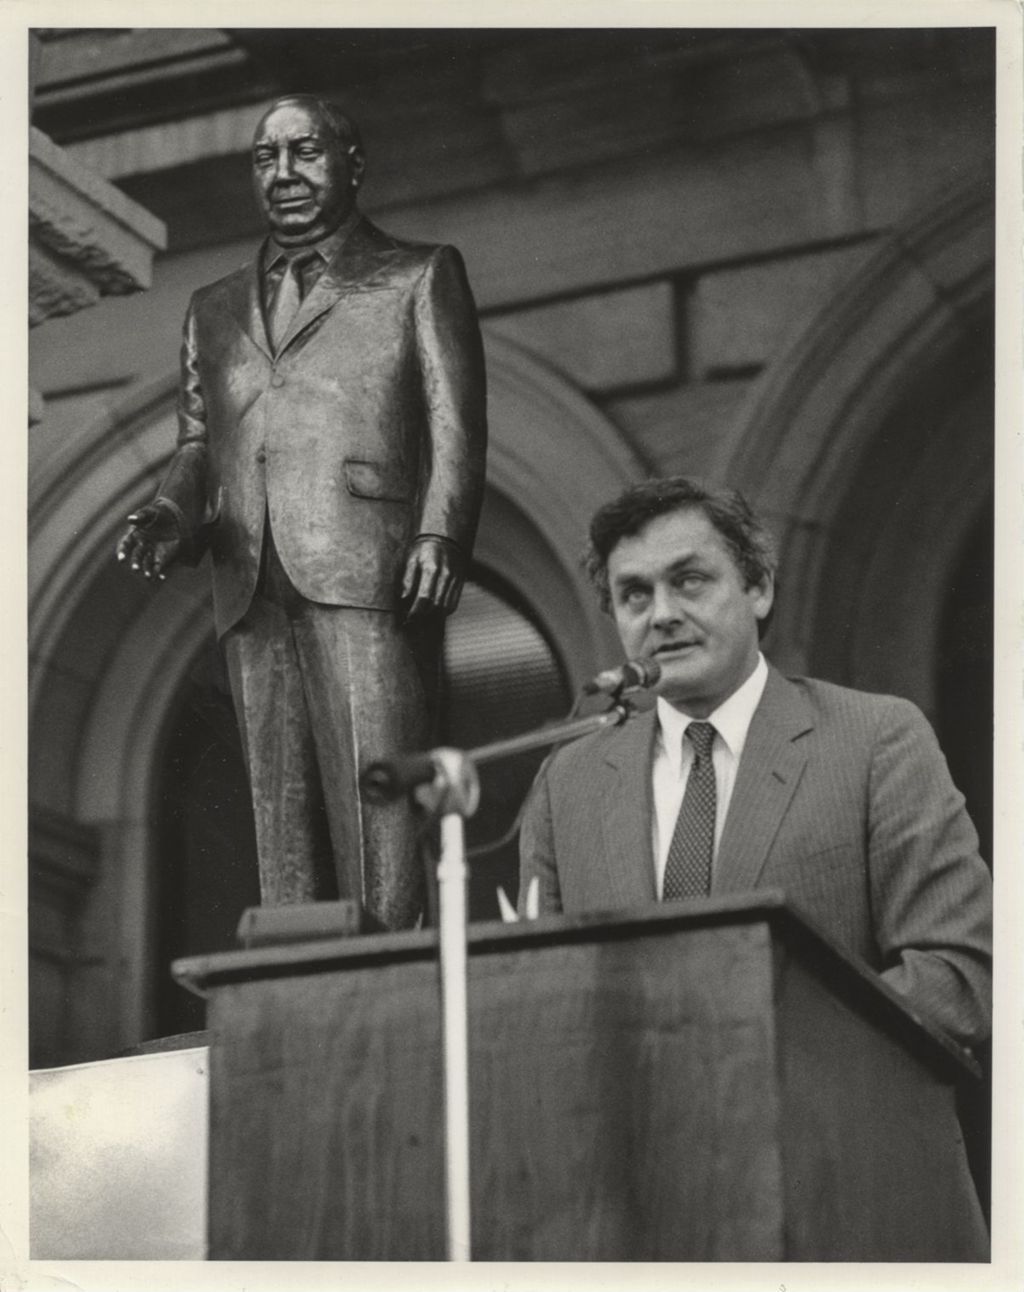 Philip Rock speaking at the Richard J. Daley statue dedication